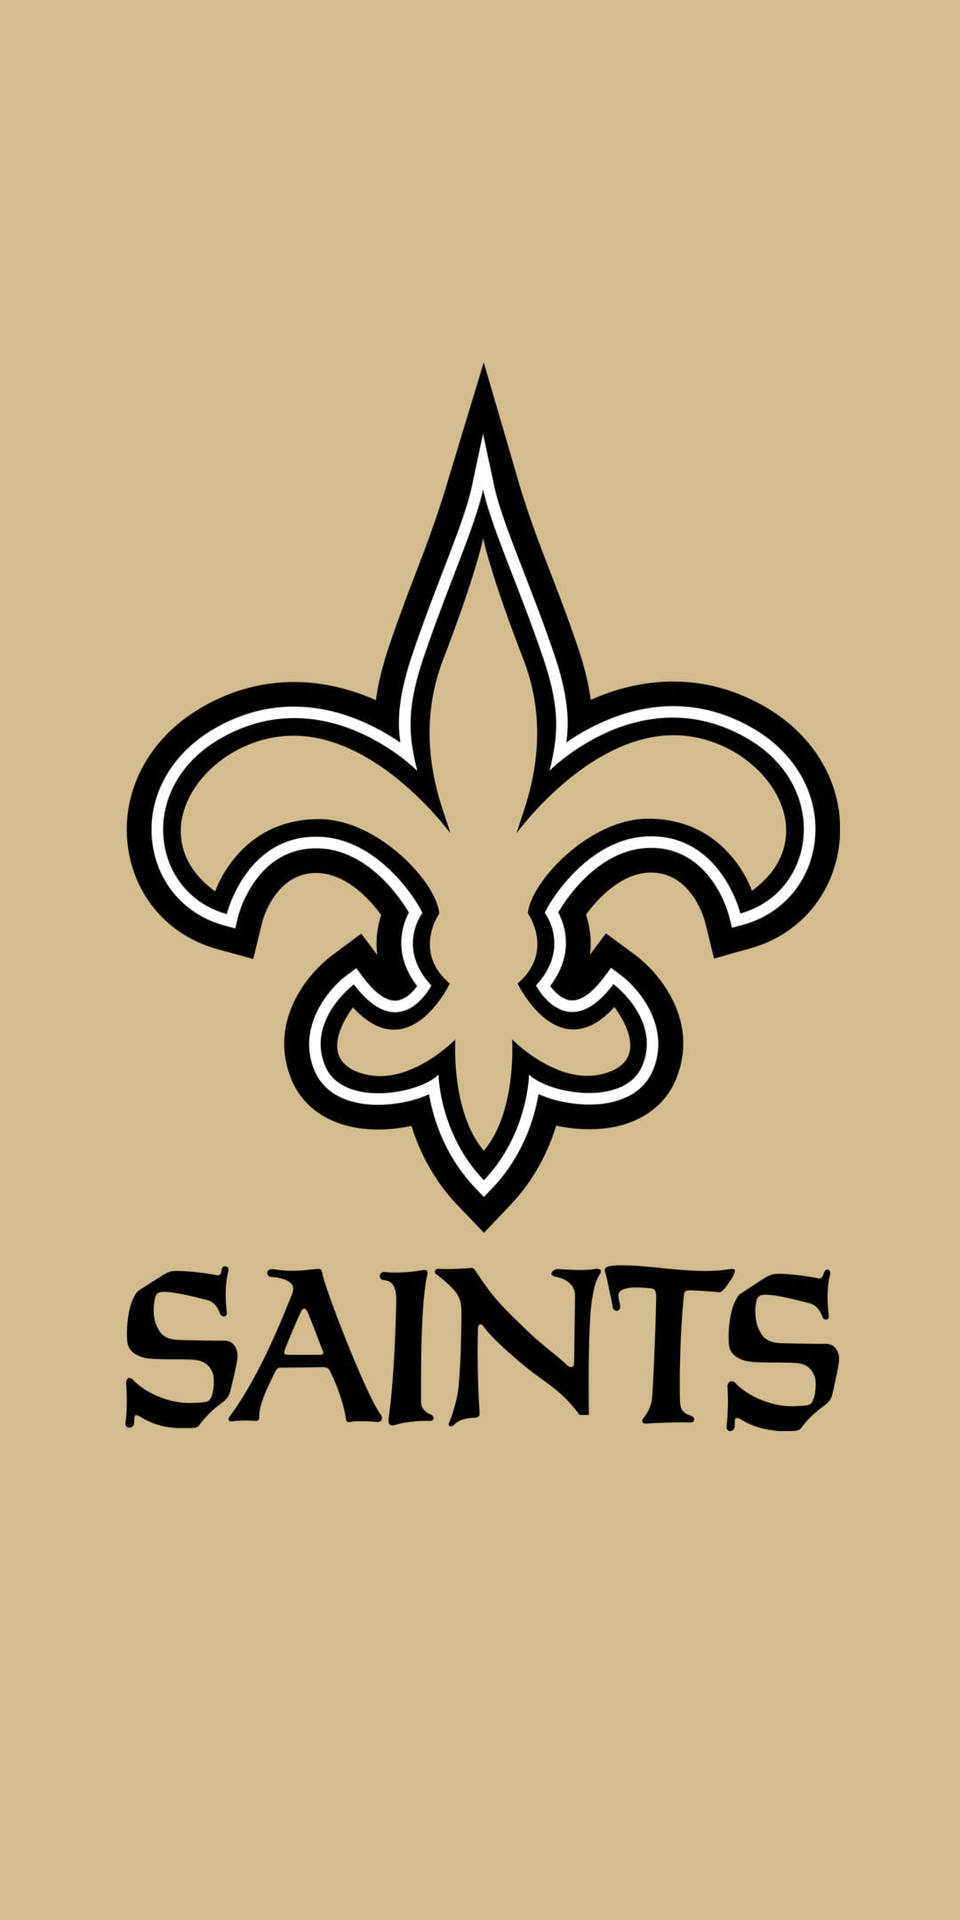 Neueorleans Saints Nfl Team Logo Wallpaper